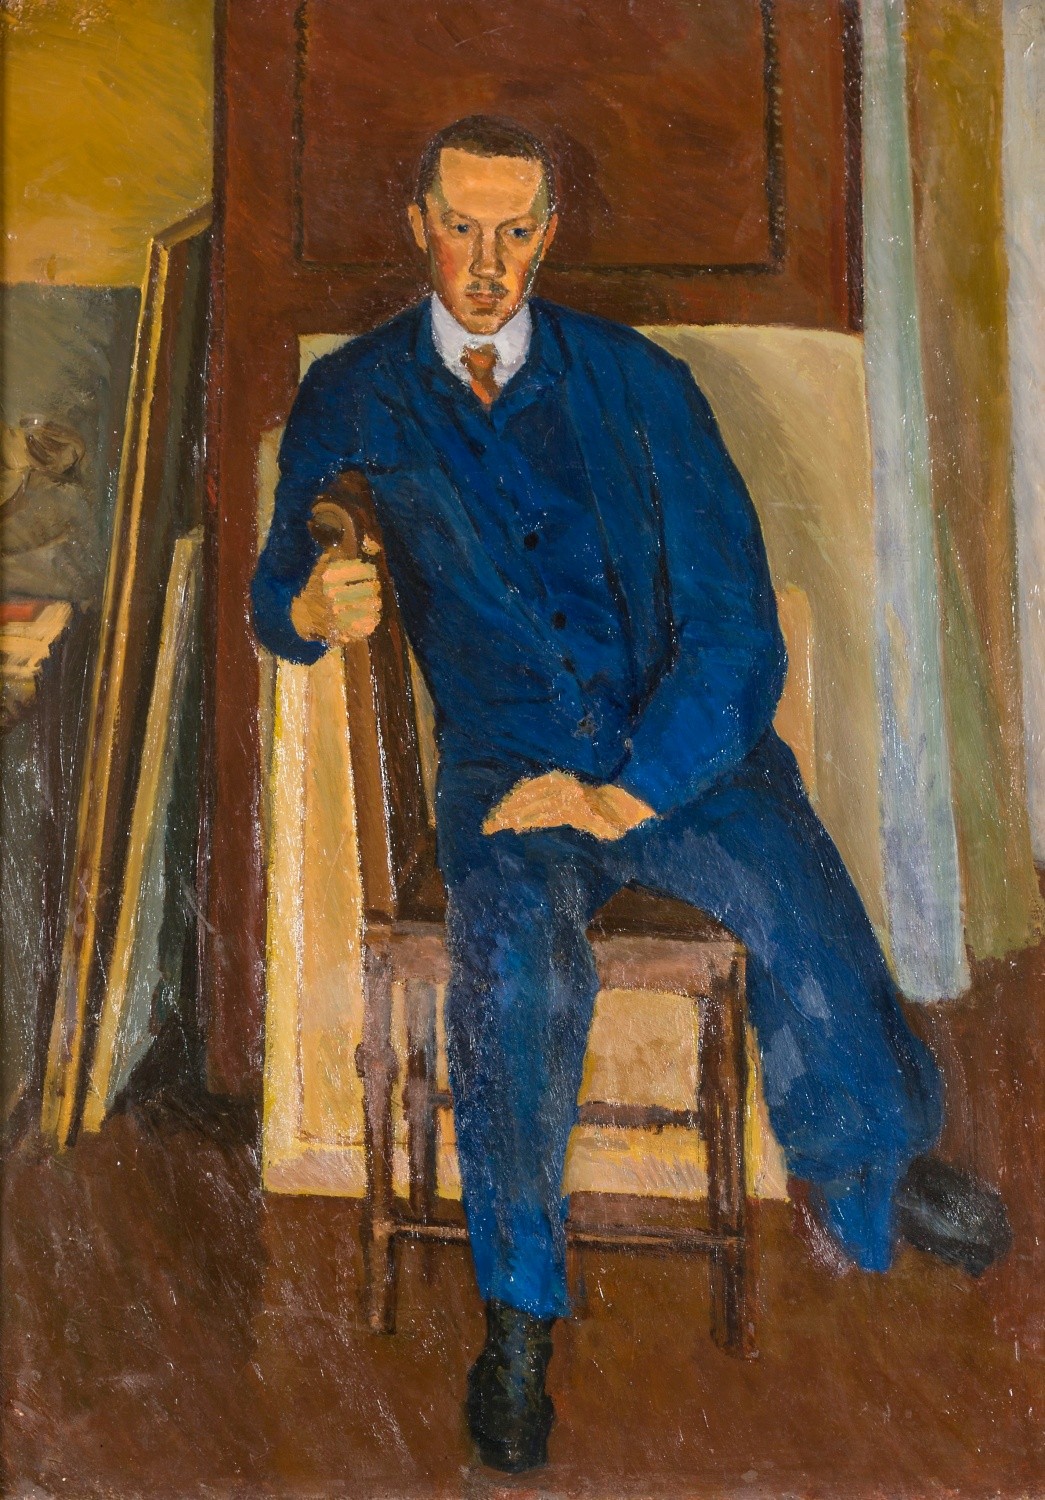 Фаворский Владимир Андреевич (1886-1964). Портрет Бориса Николаевича Эдинга. 1915 или 1918